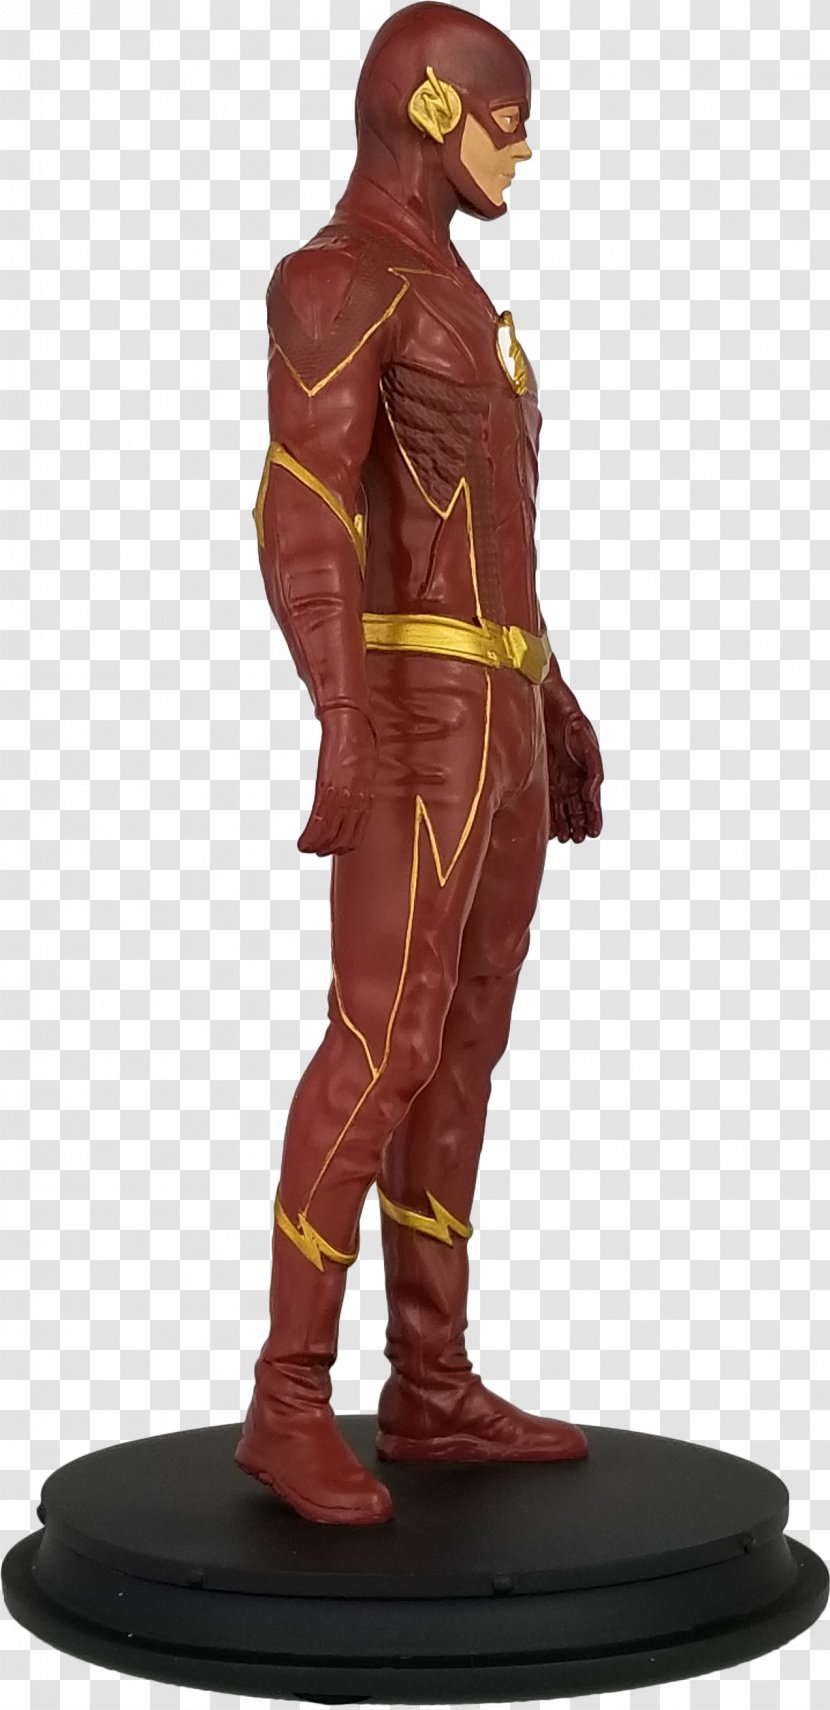 Flash Vs. Arrow Deathstroke Captain Cold Figurine Transparent PNG